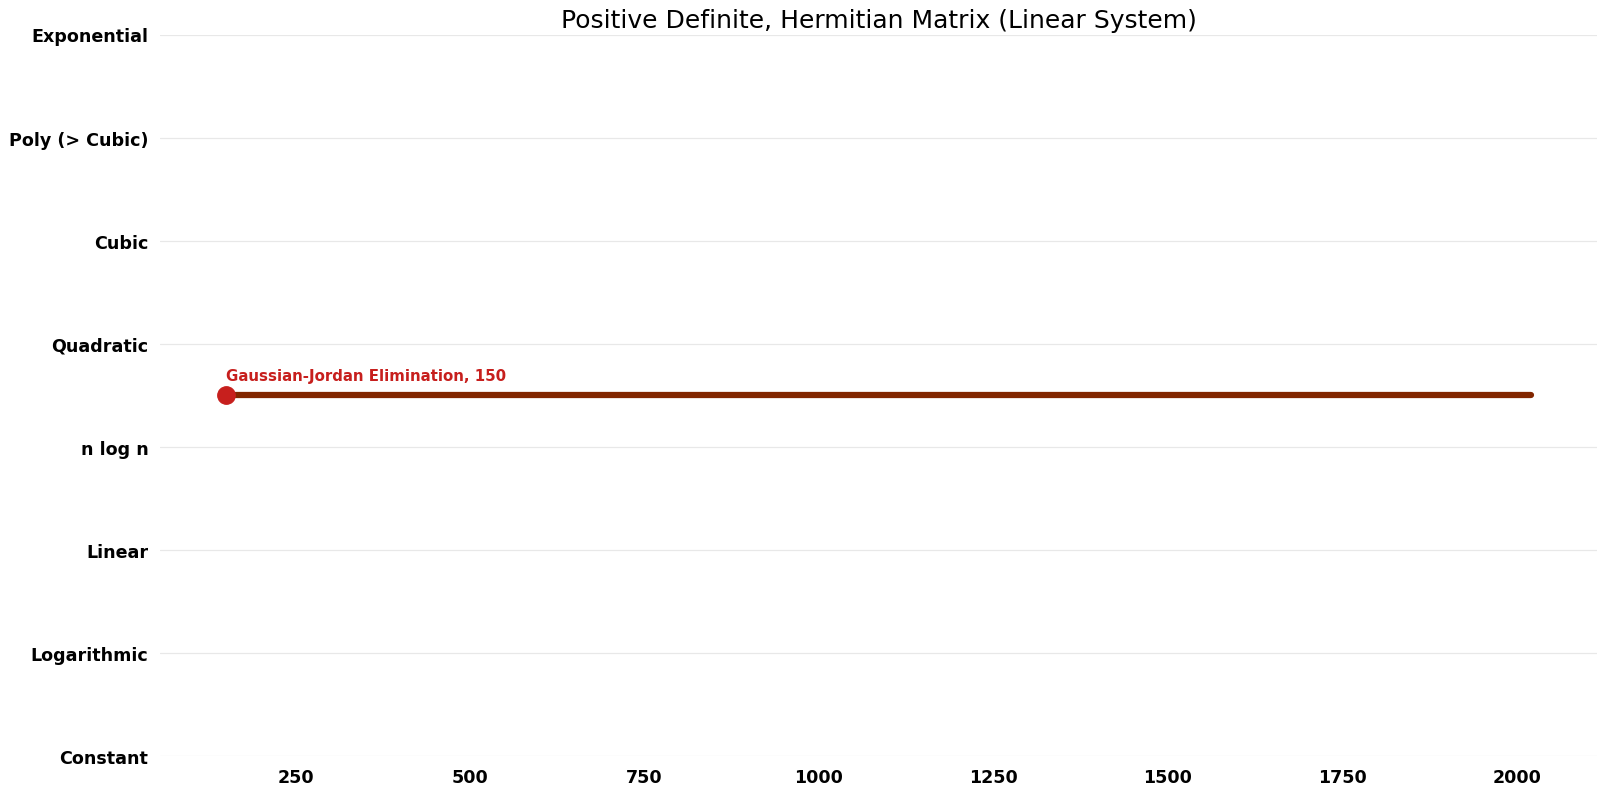 File:Linear System - Positive Definite, Hermitian Matrix - Time.png